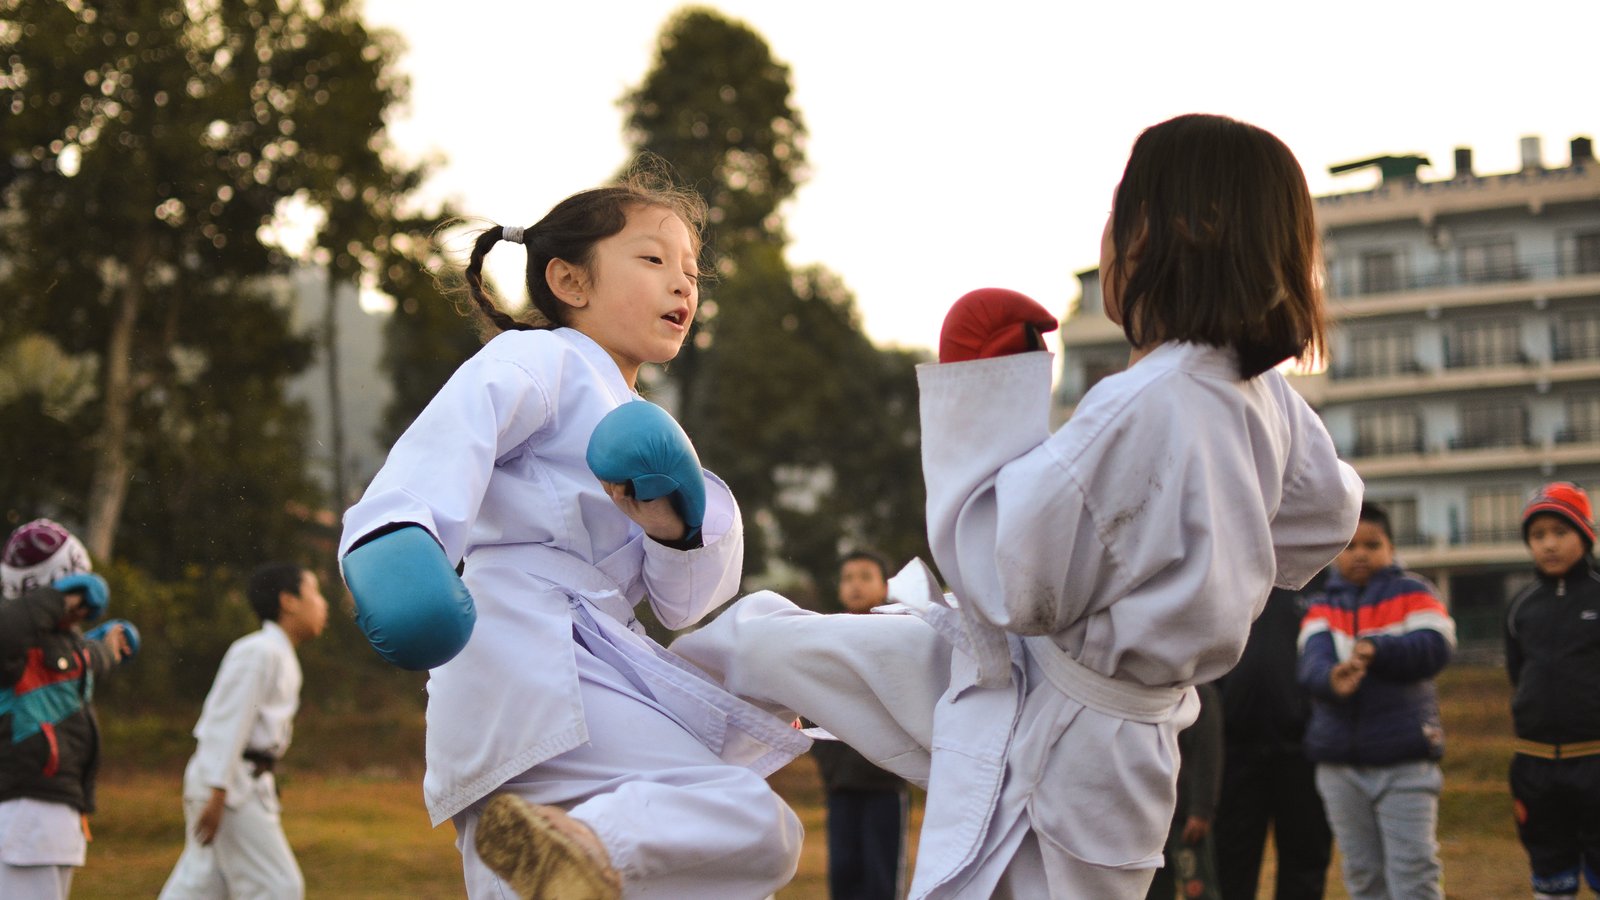 Sada ik draag kleding Uitrusting Top 10 Martial Arts for Kids Camps - Tripaneer.com